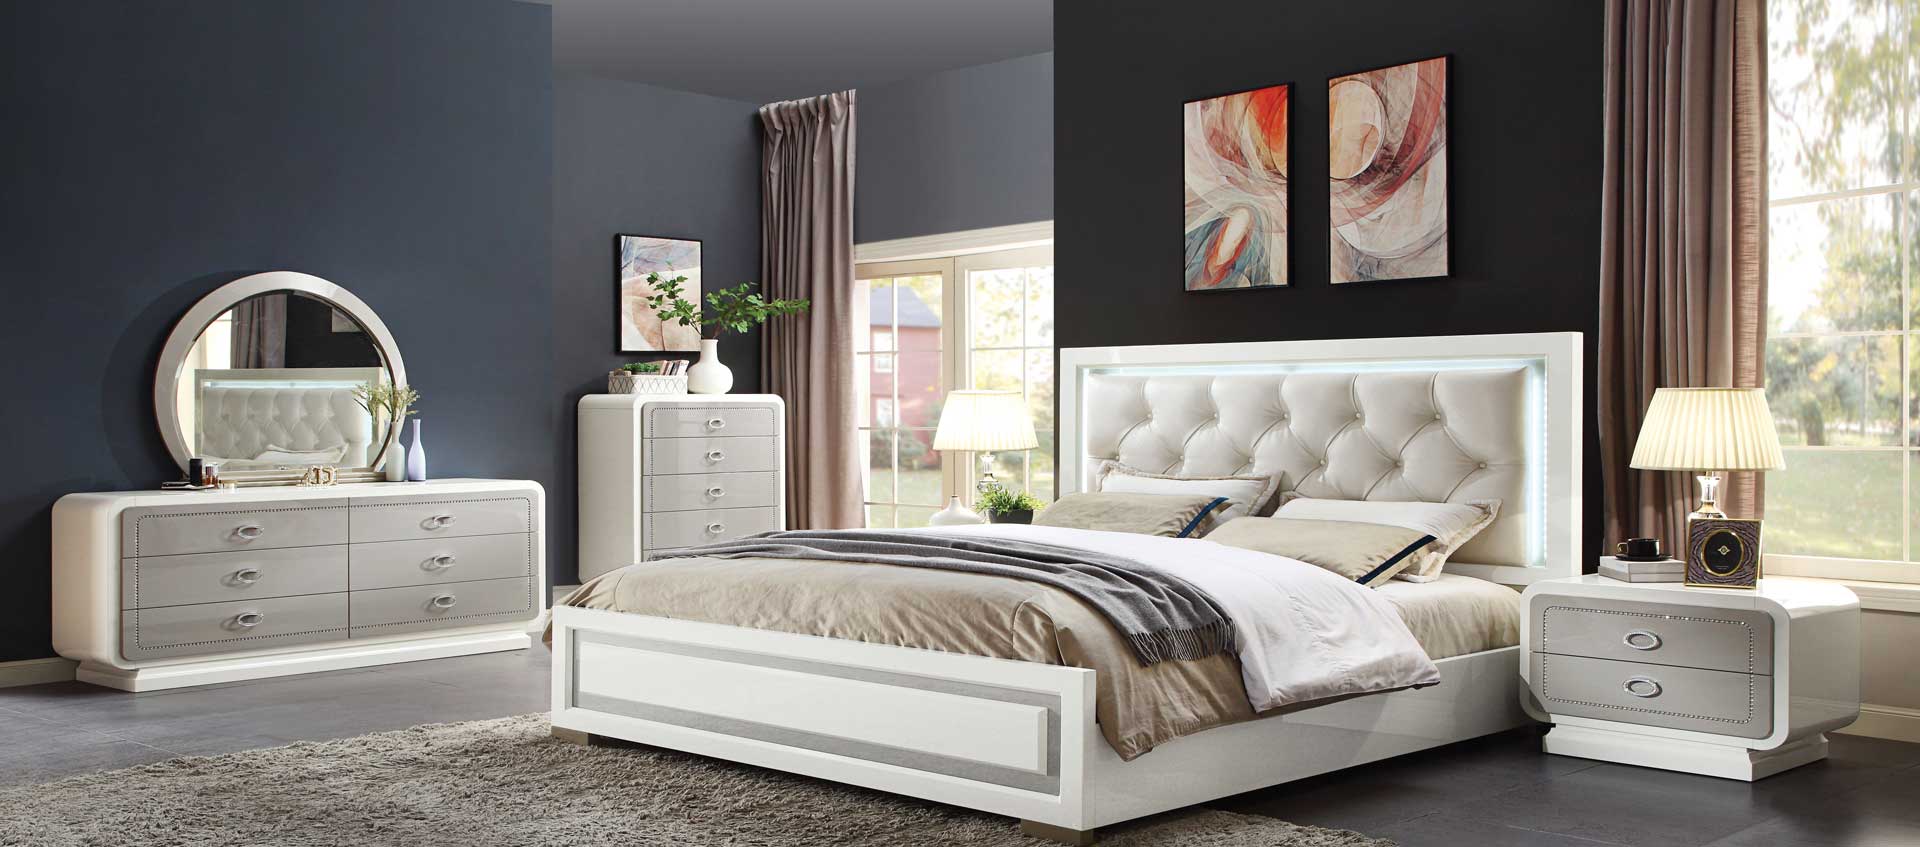 bedroom furniture stores richmond